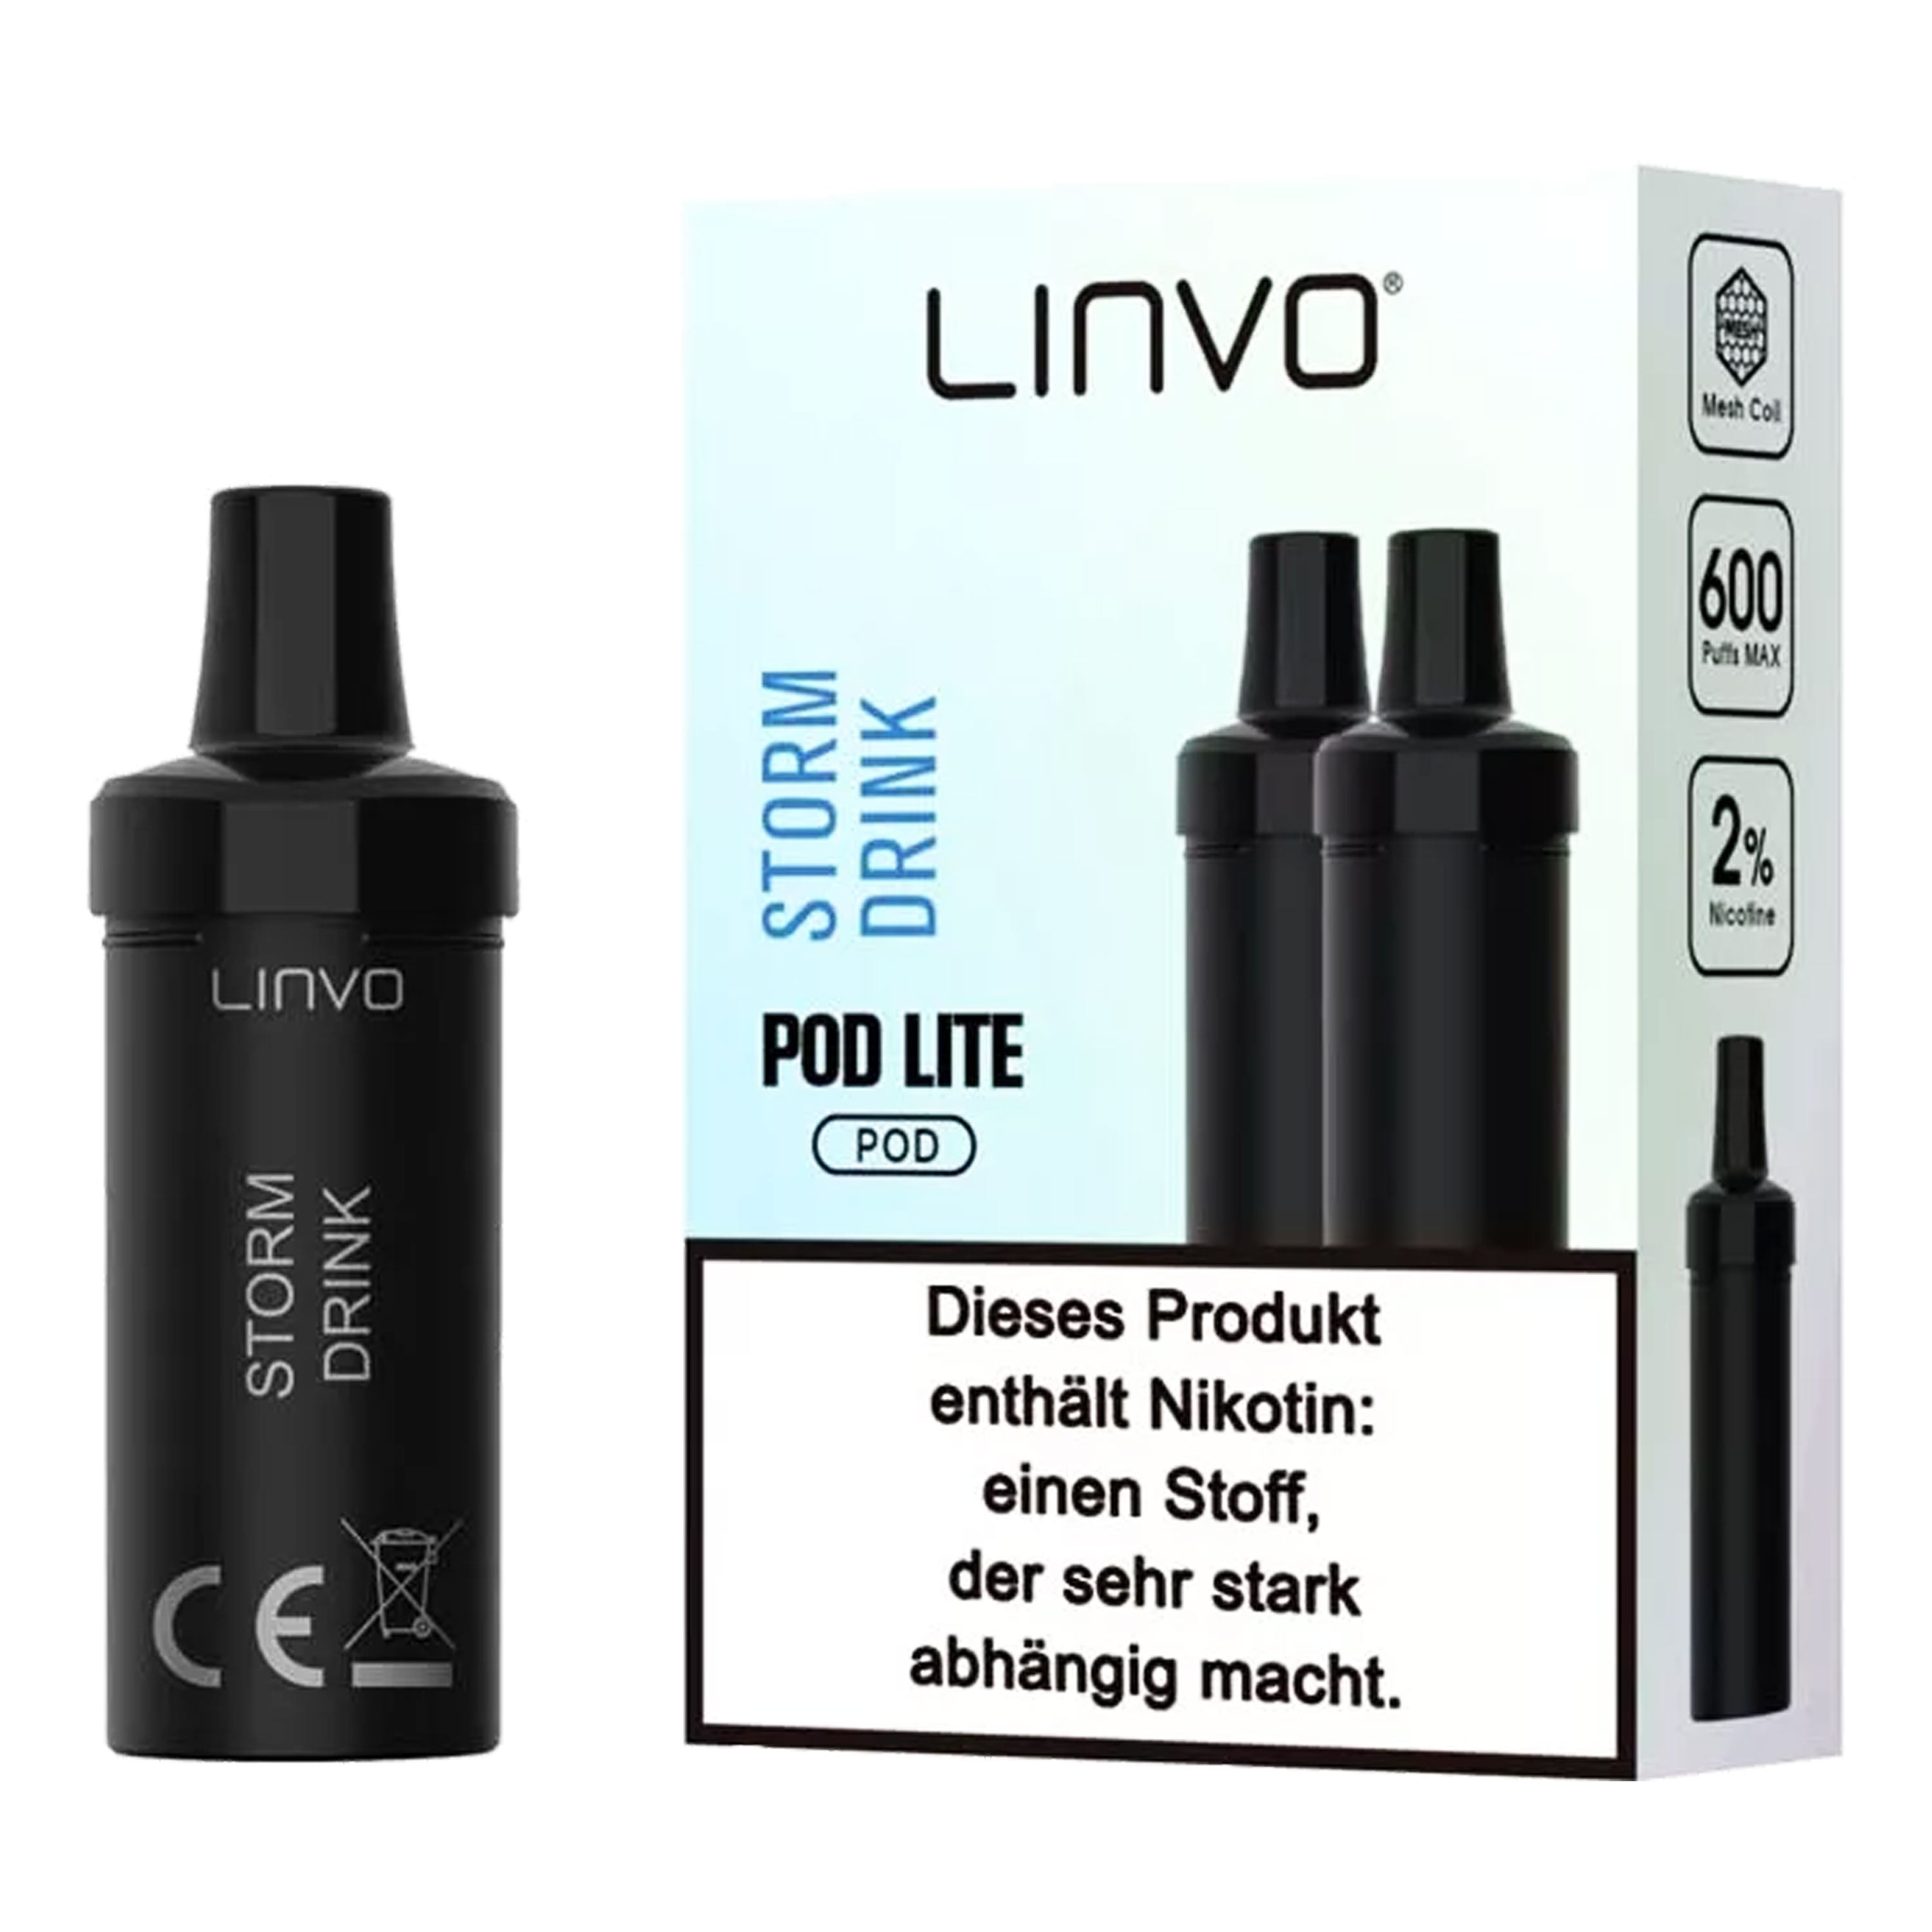 Linvo  - Pod Lite - Storm Drink (2 x 2 ml) - Pod (2 Stück)